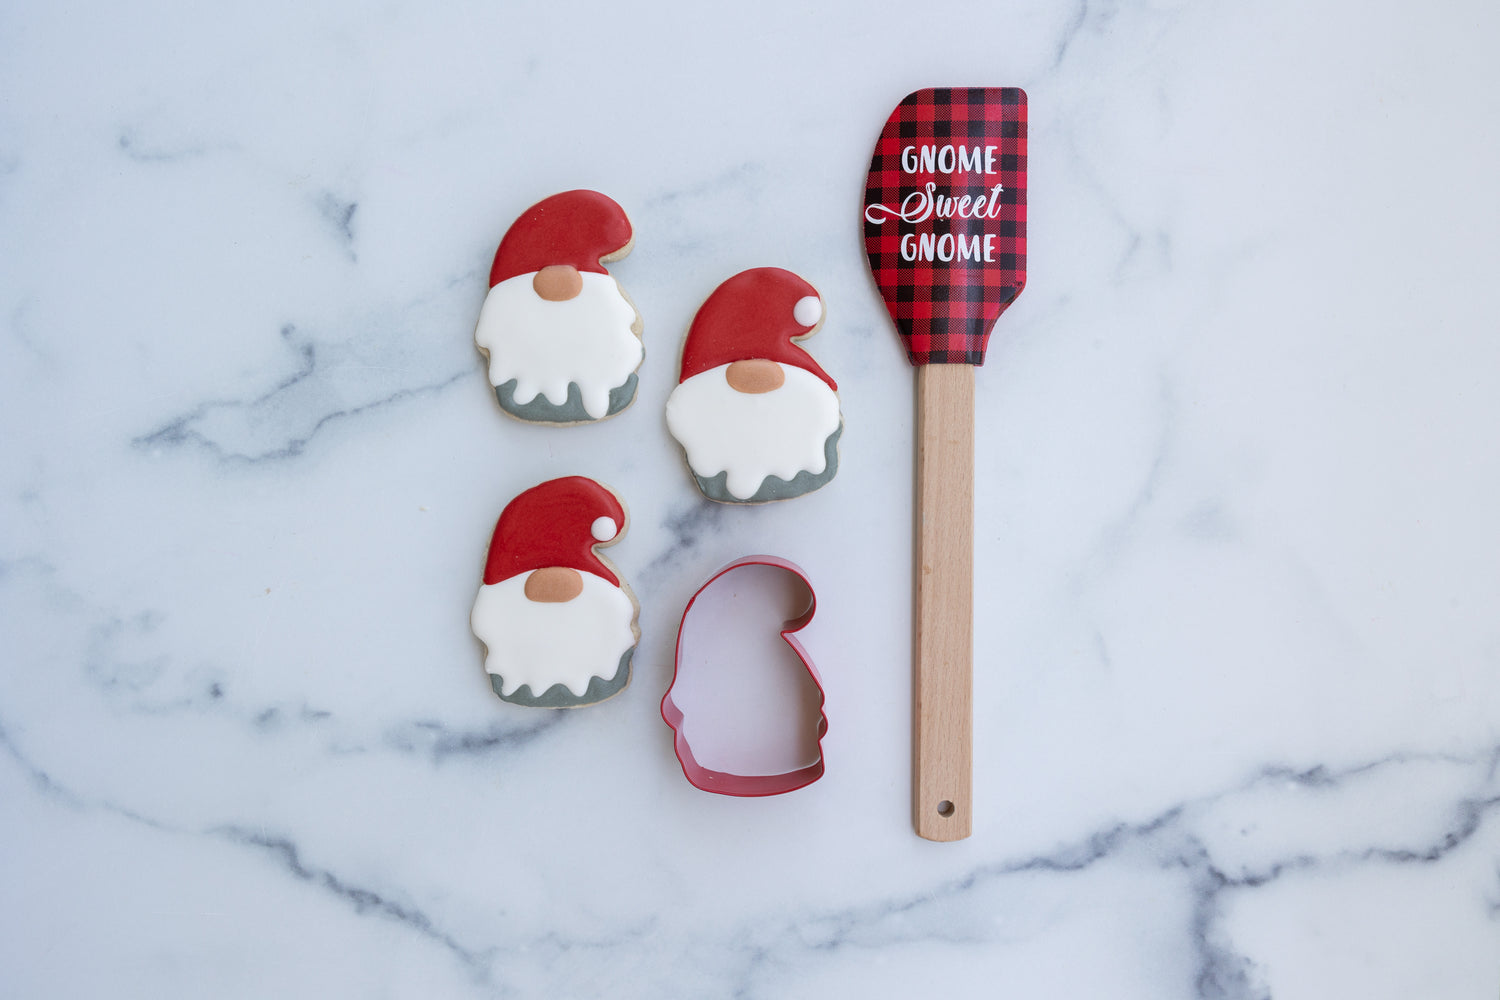 Winter Wonderland Deluxe Cookie Decorating Set – Handstand Kitchen